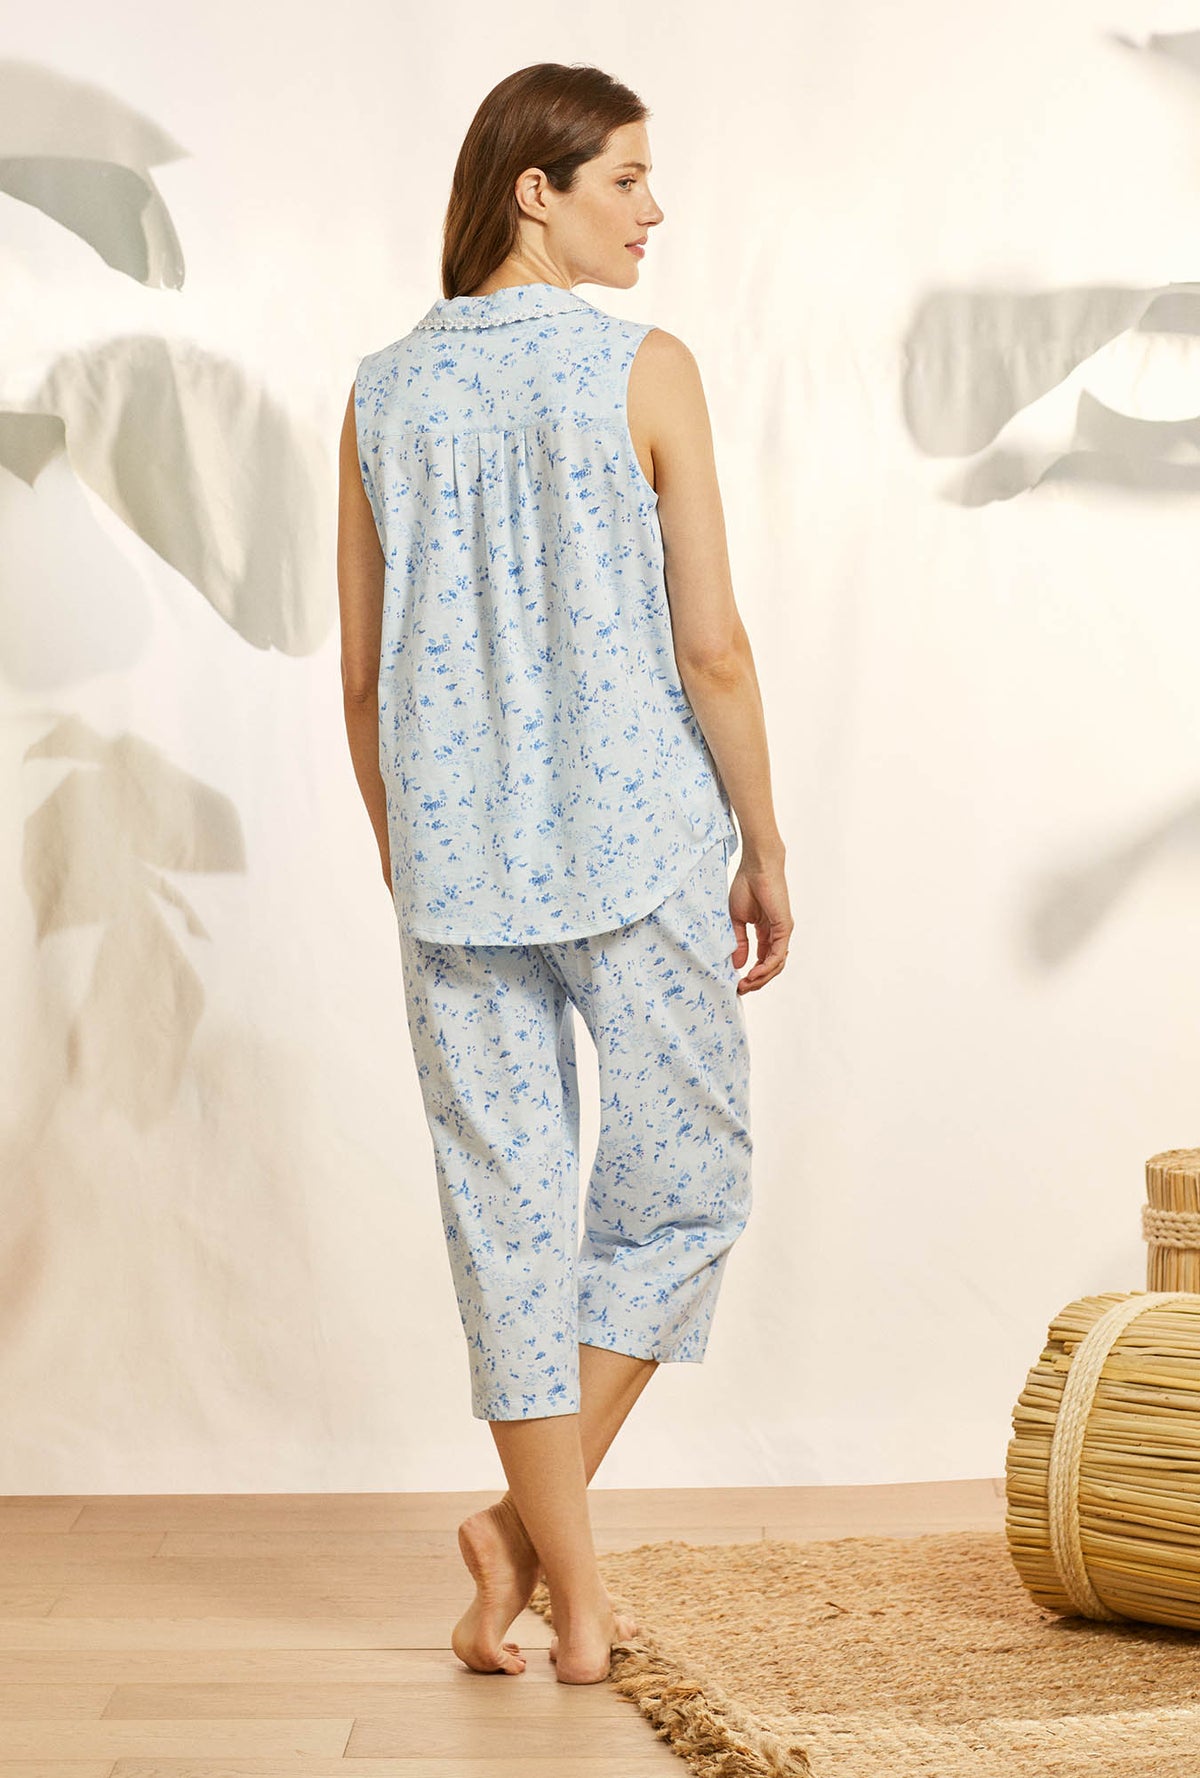 A lady wearing blue sleeveless cotton knit capri pajama with blue fields print.